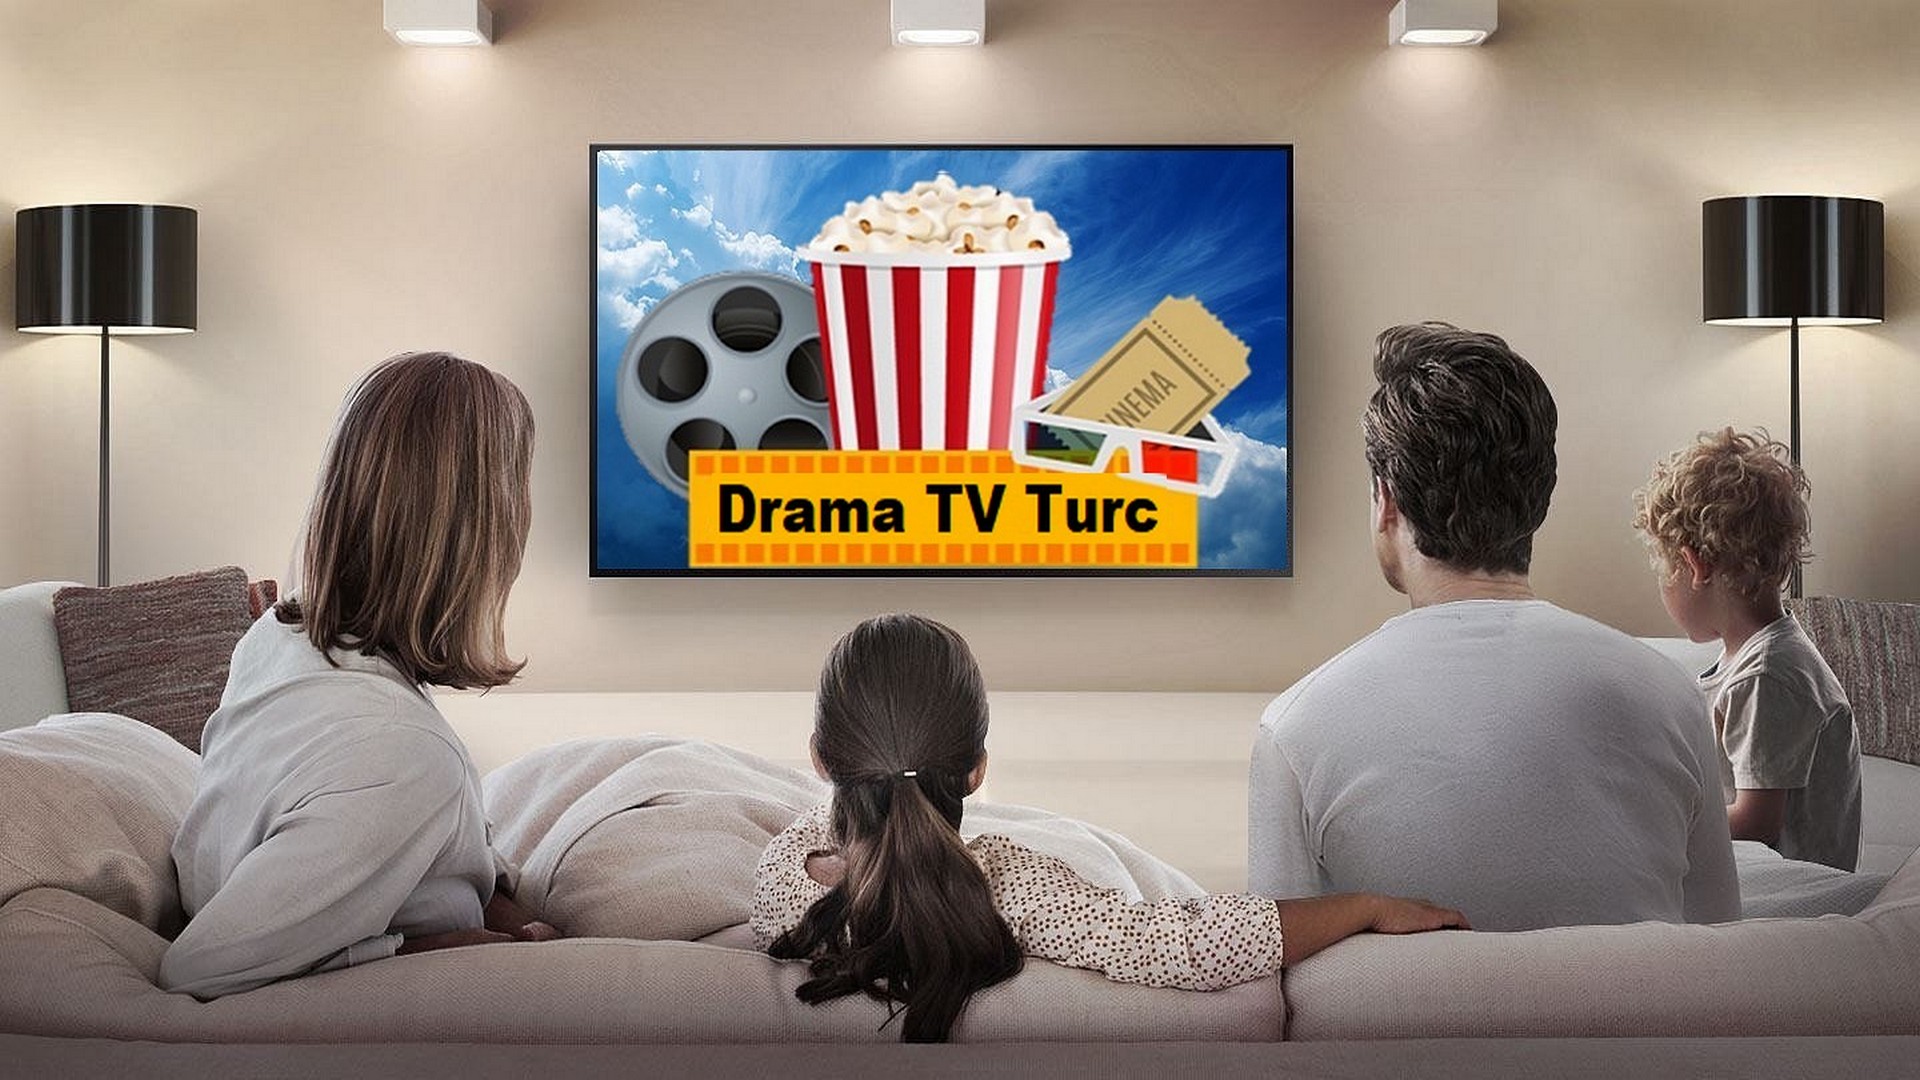 Drama TV Turc